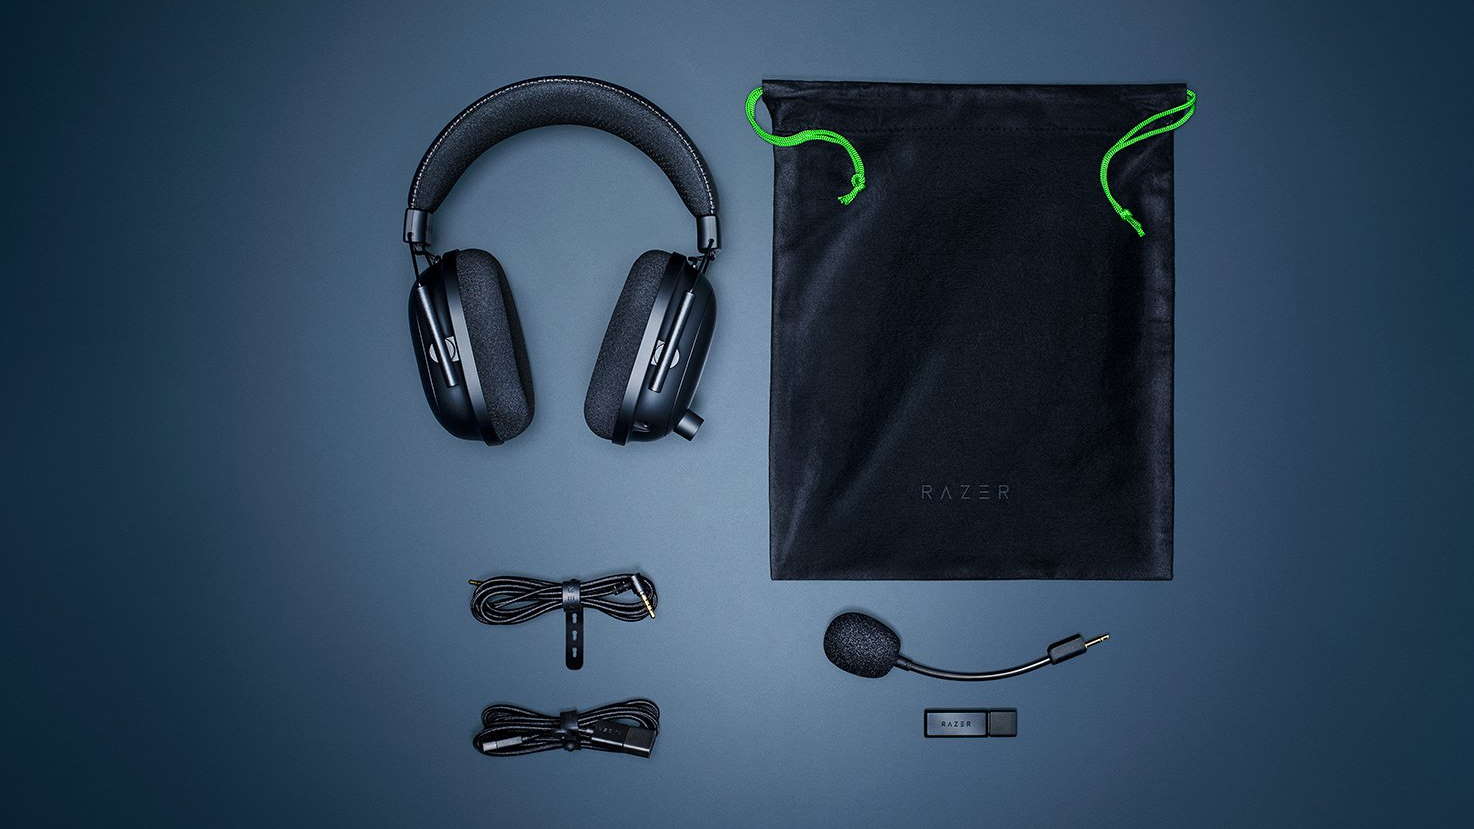 Razer Blackshark V2 Pro gaming headset and accessories